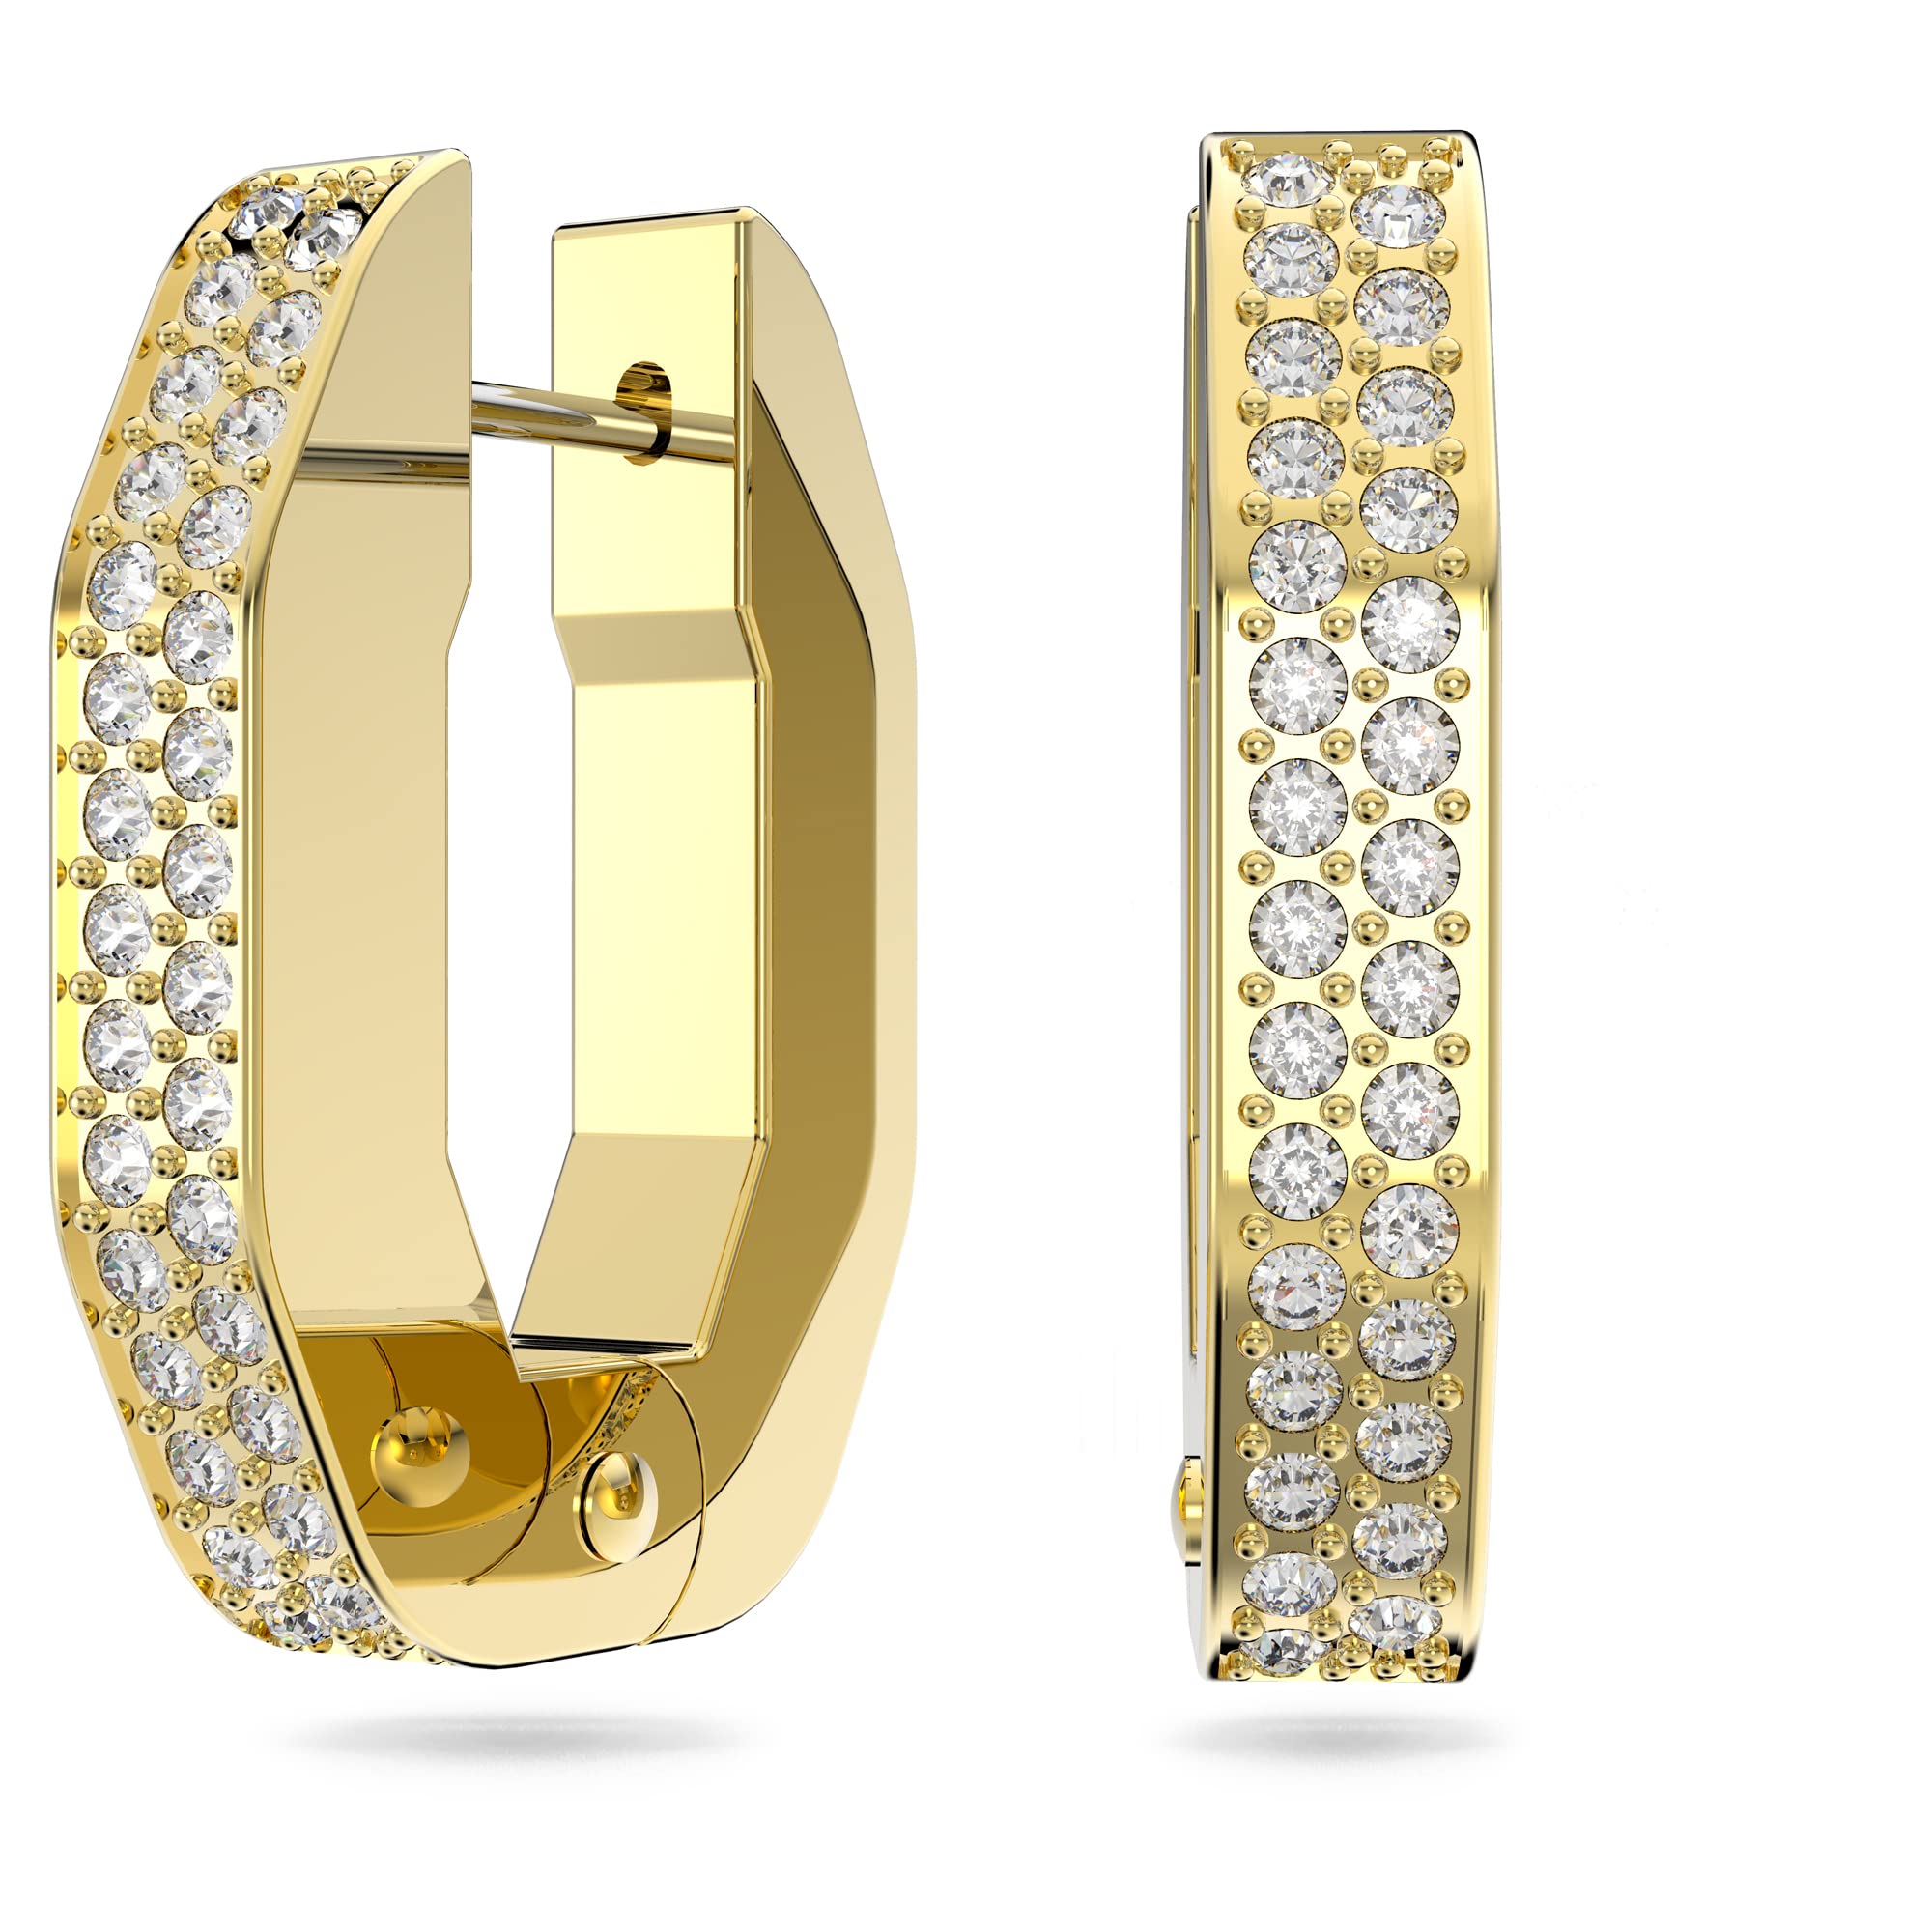 Swarovski Dextera Crystal Earrings Jewelry Collection, Rhodium Tone & Gold Tone Finish